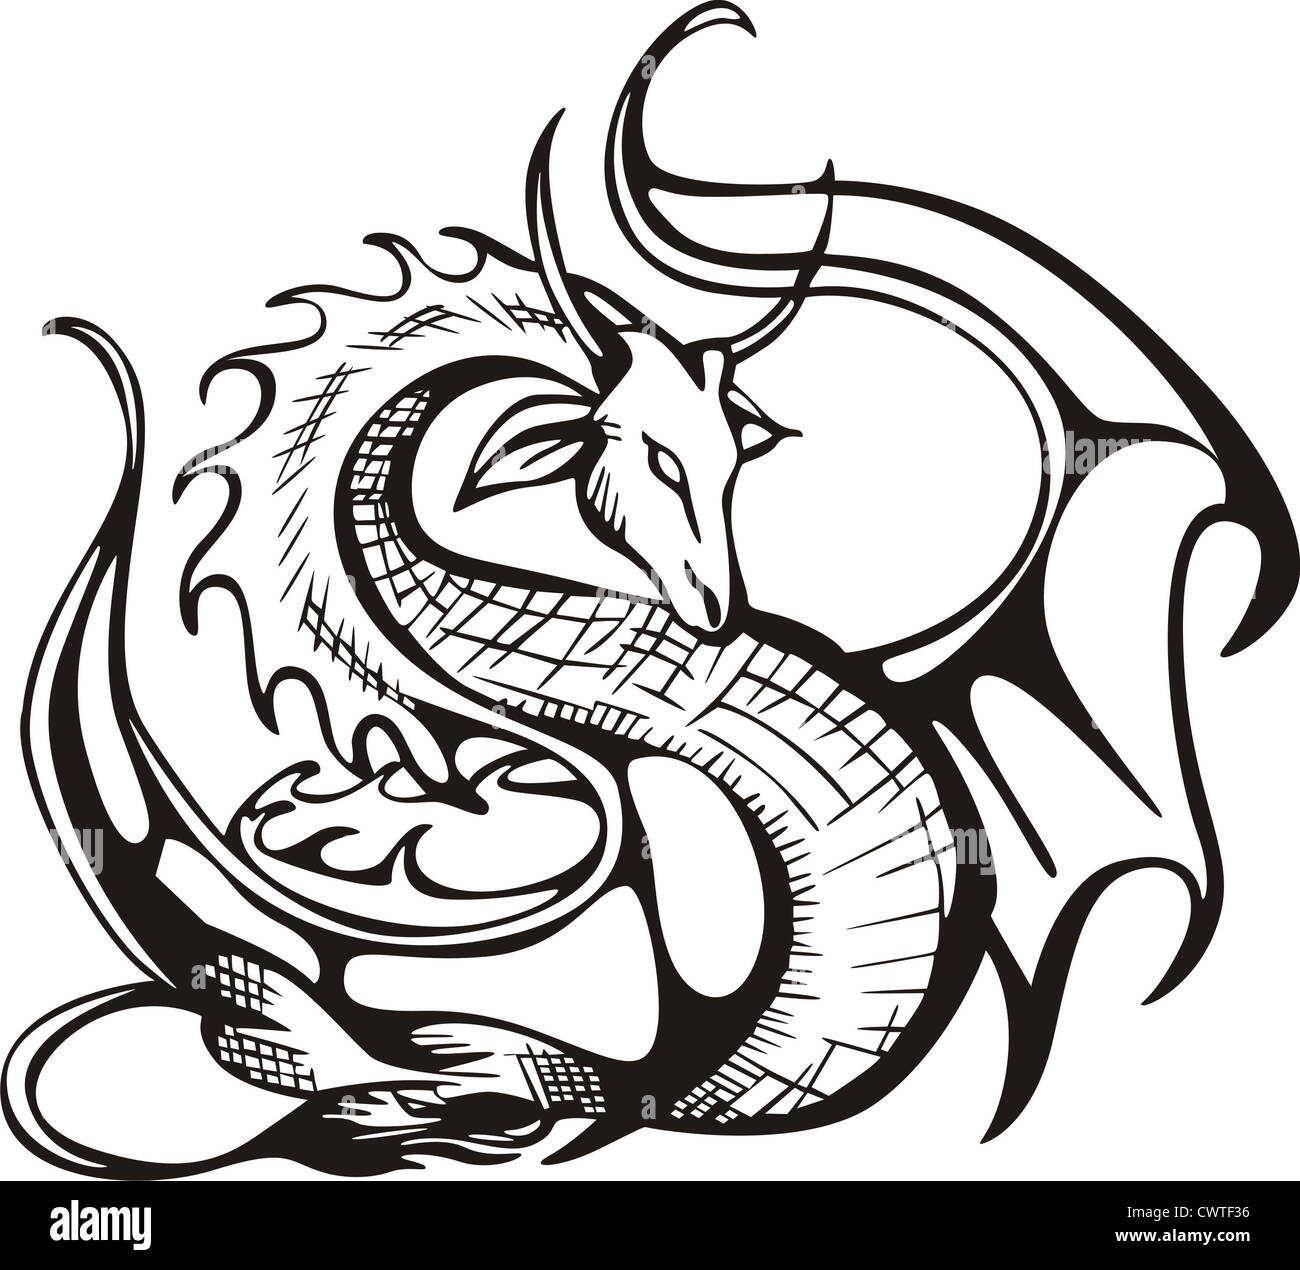 Raising dragon. Black and white vector illustration Stock Photo